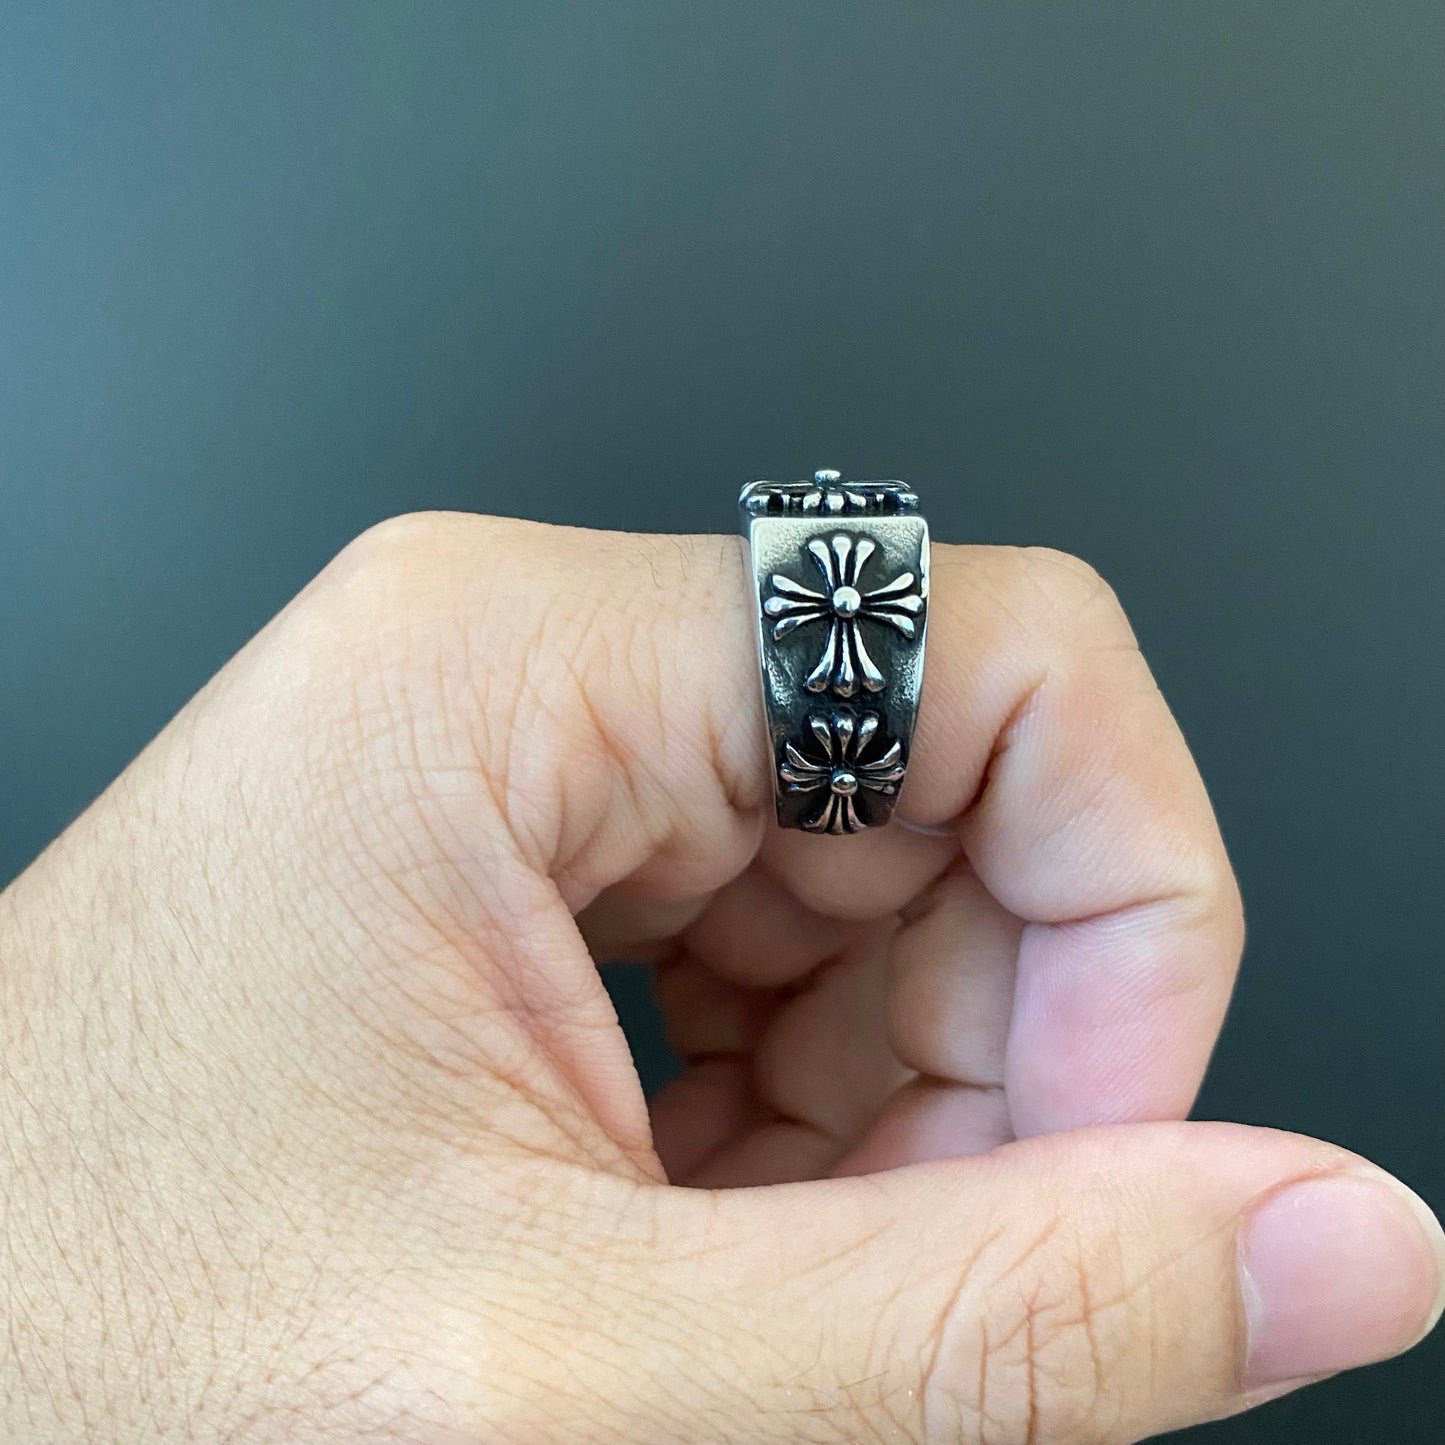 Medieval Fleur Ring